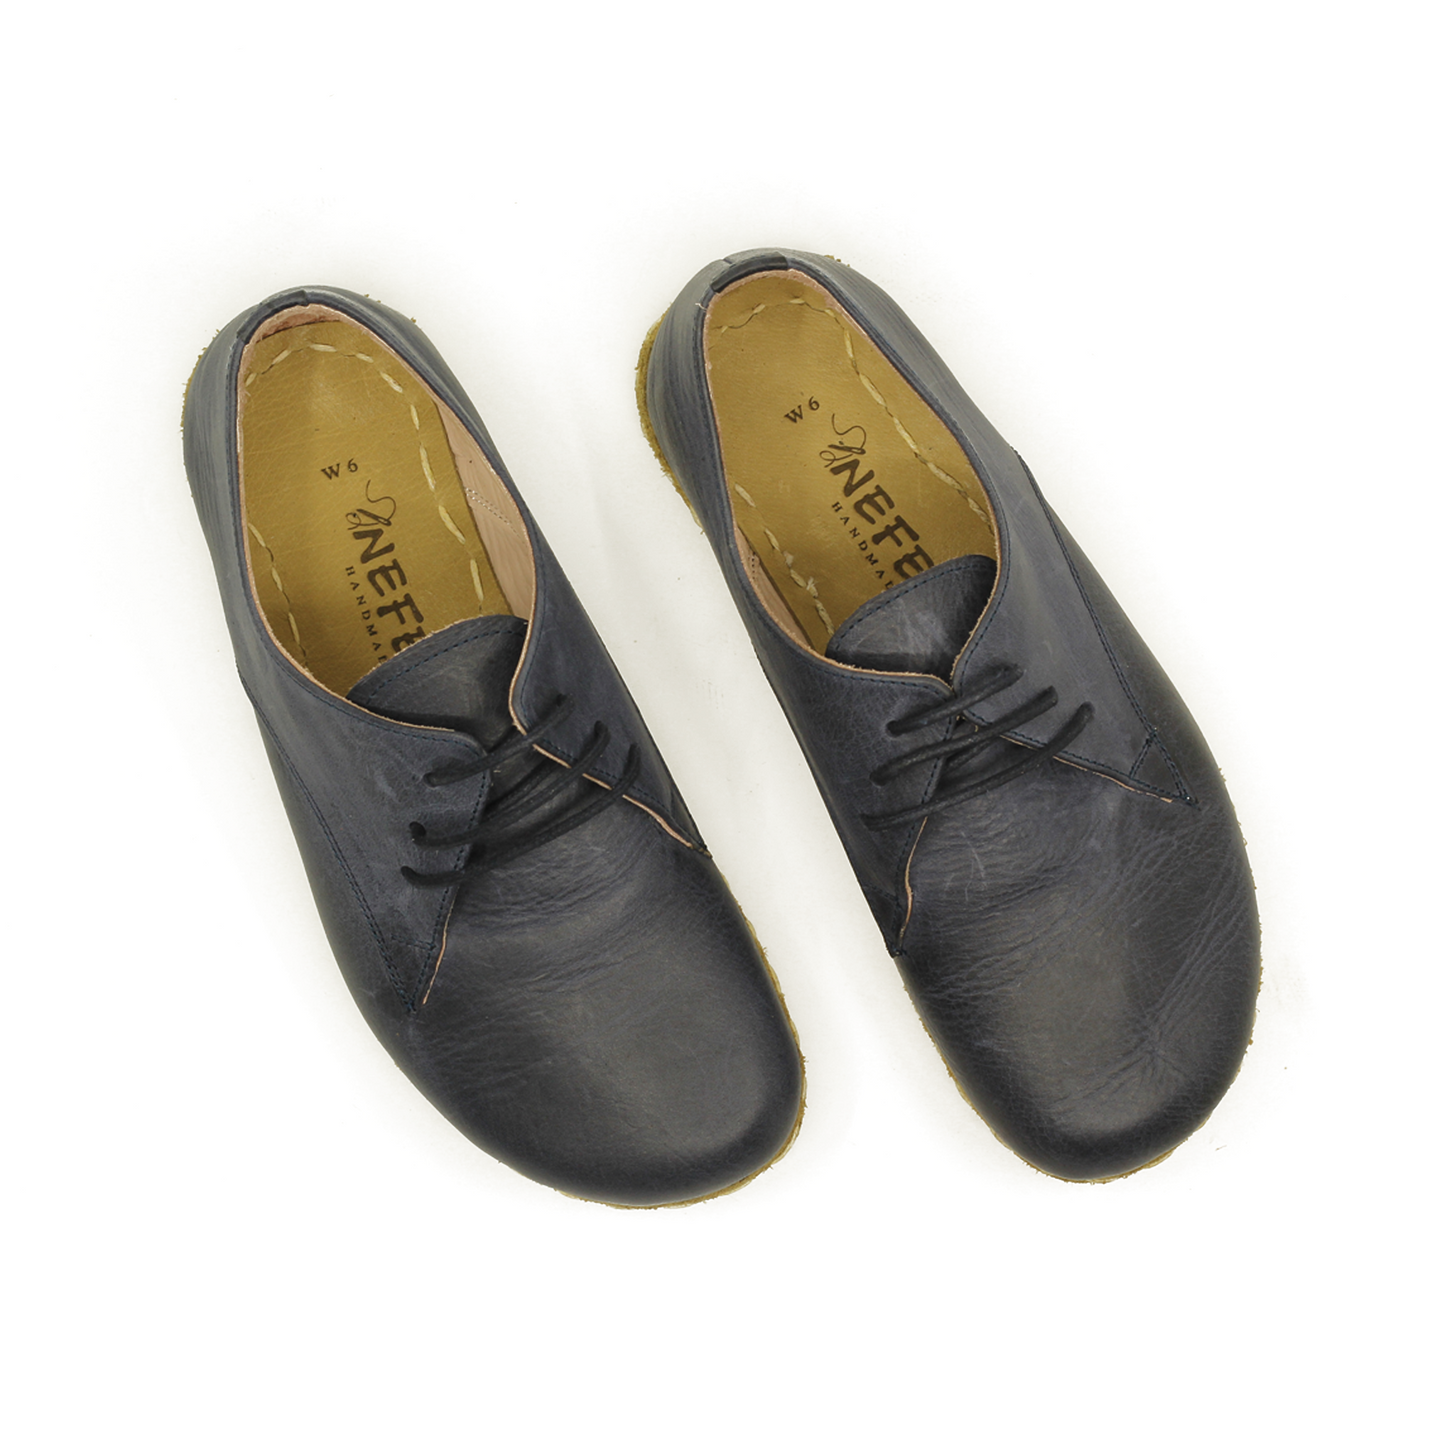 Crazy Navy Blue Leather Barefoot Shoes: Handmade & Zero Drop